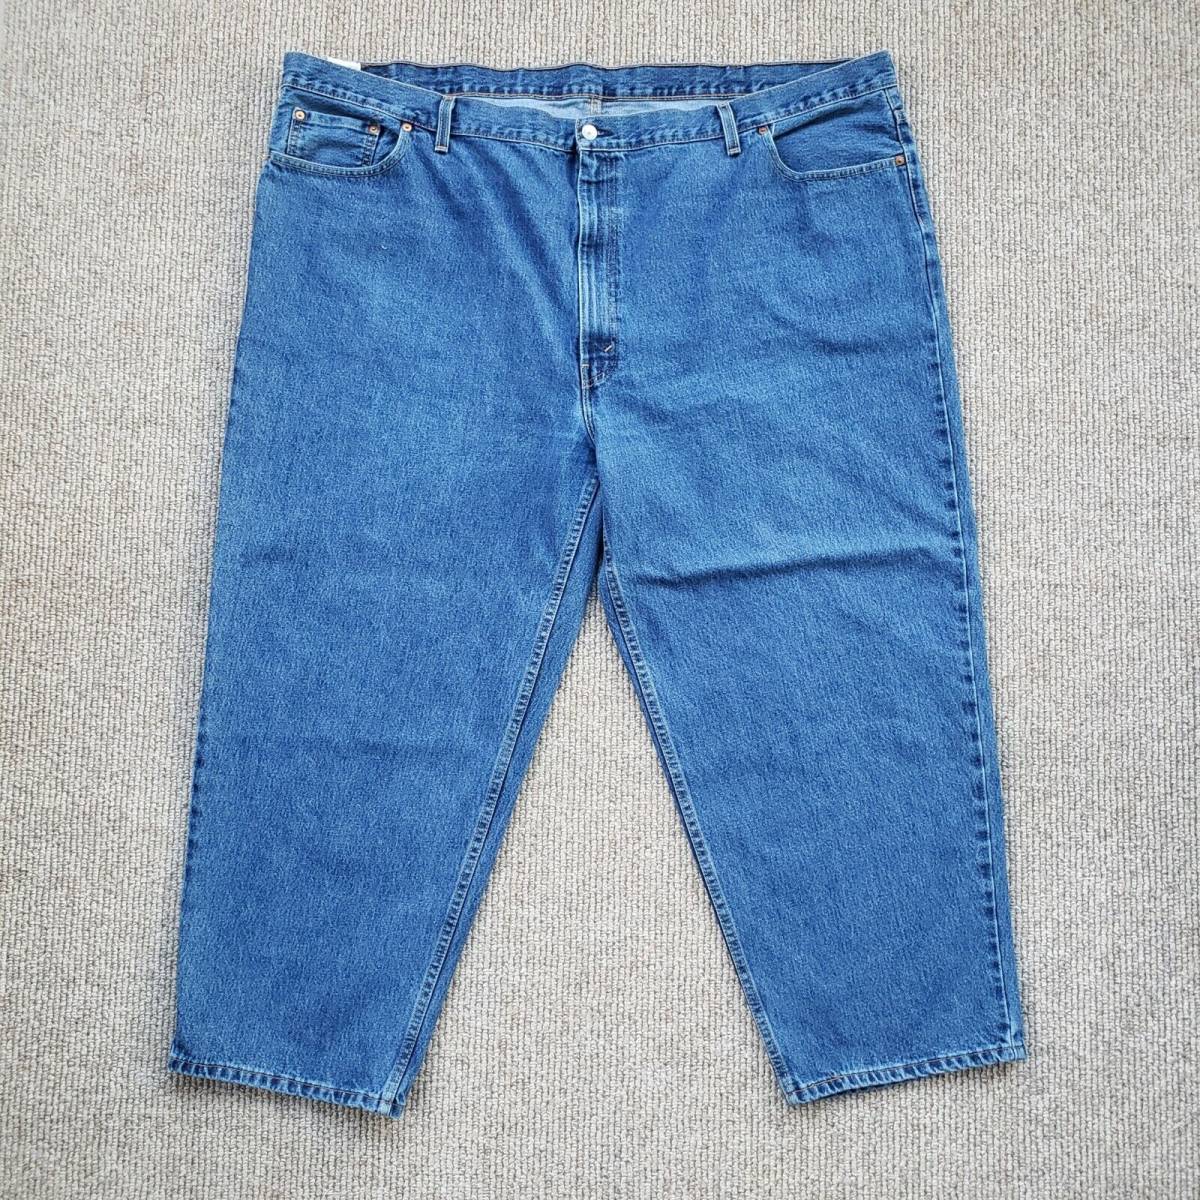 Levi's 560 Denim Blue Jeans Men's 53x29 海外 即決